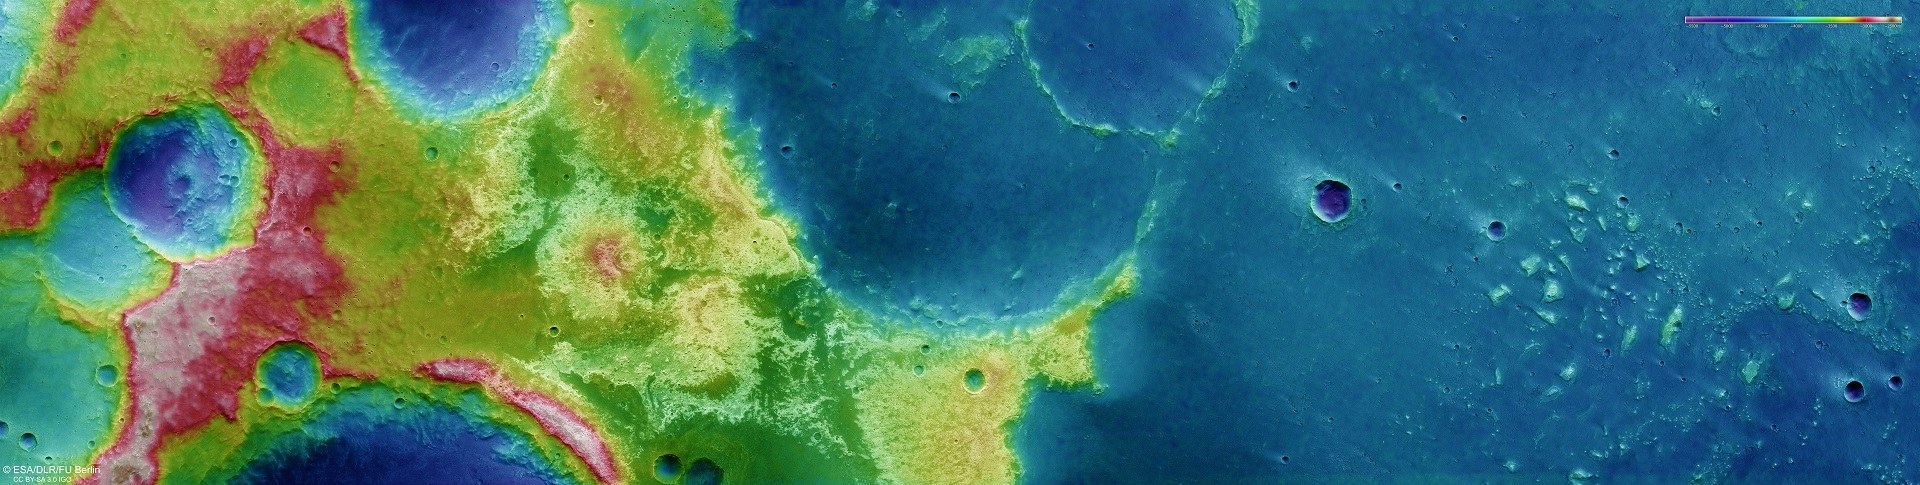 Topographic image map of the Mawrth Vallis region